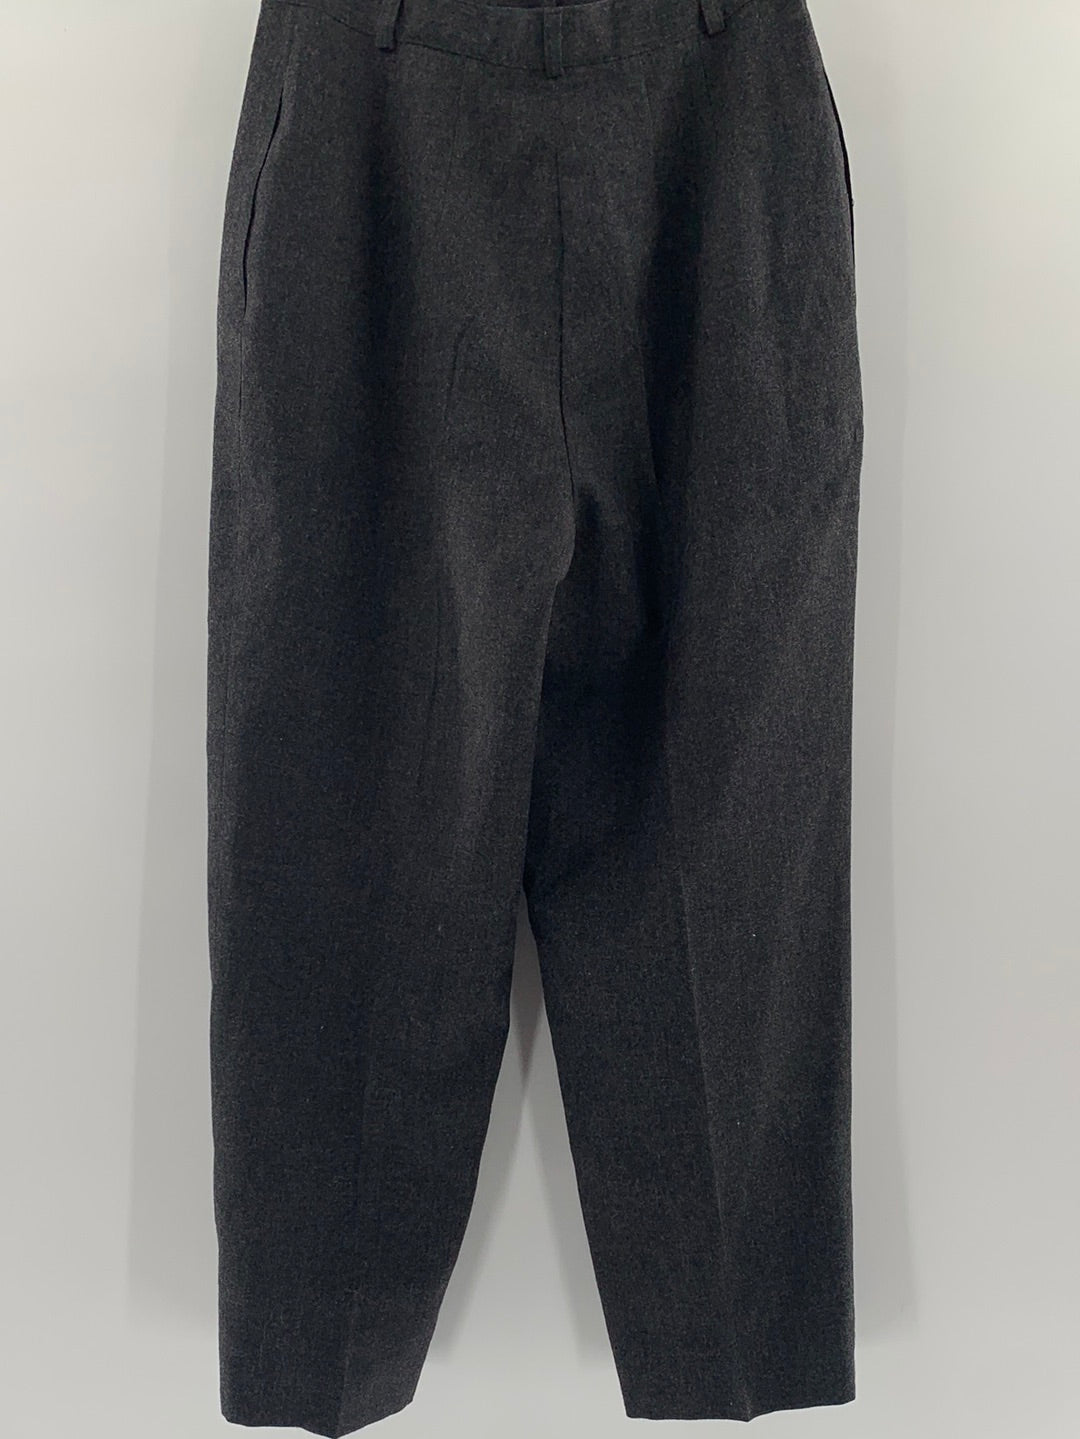 Harvé Benard Vintage Wool Trousers (Size 12 P)